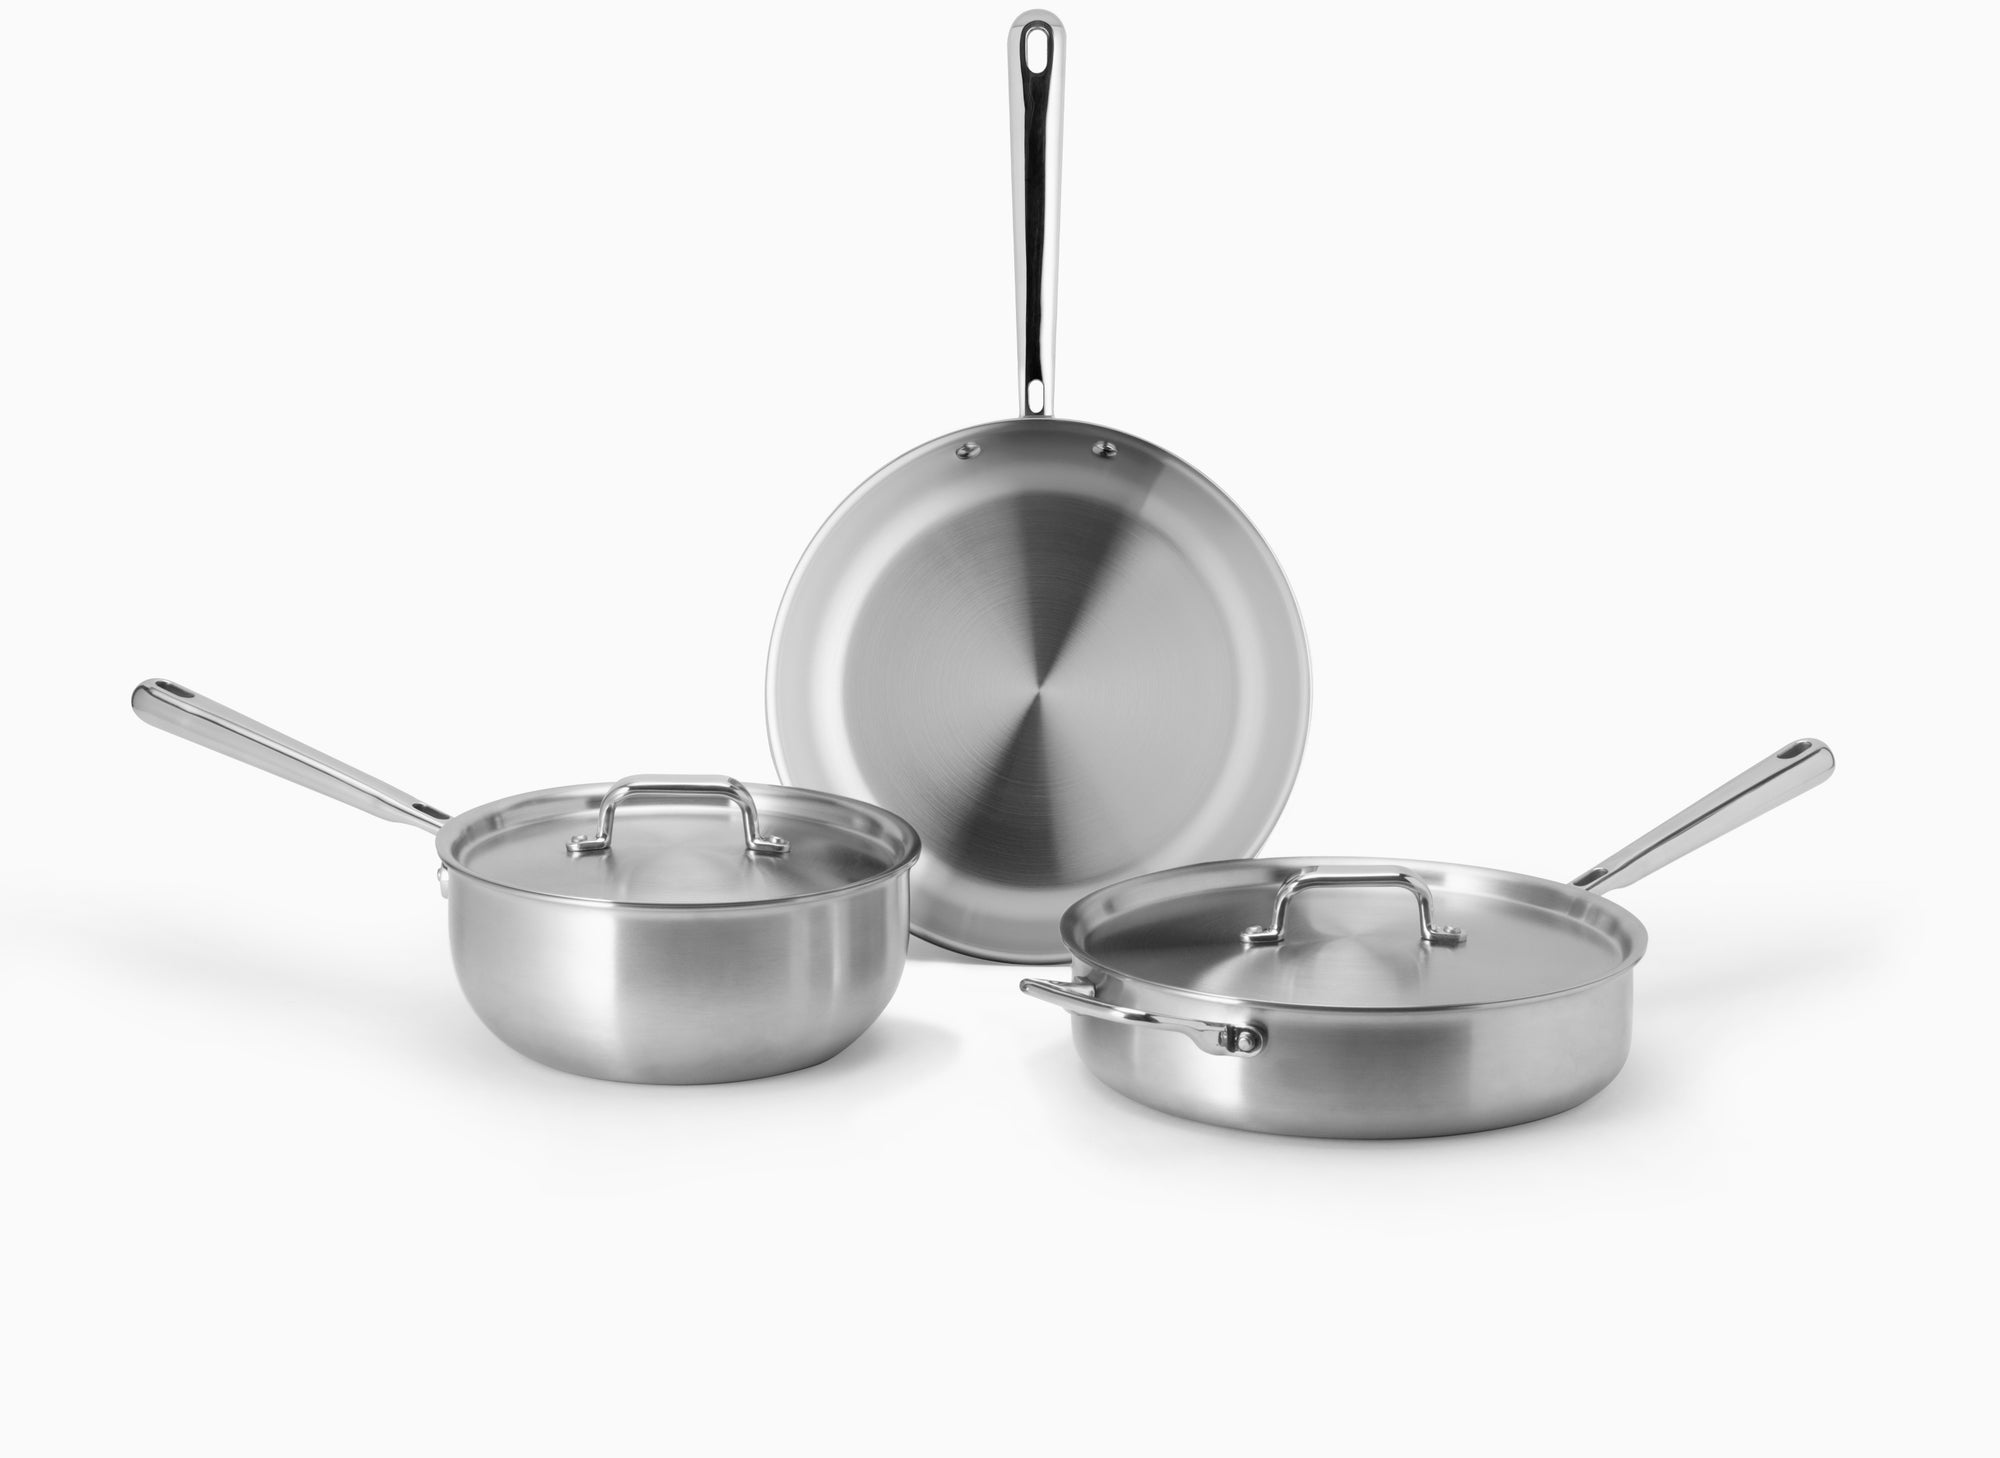 Misen Nonstick Pots and Pans Set: A Comprehensive Guide